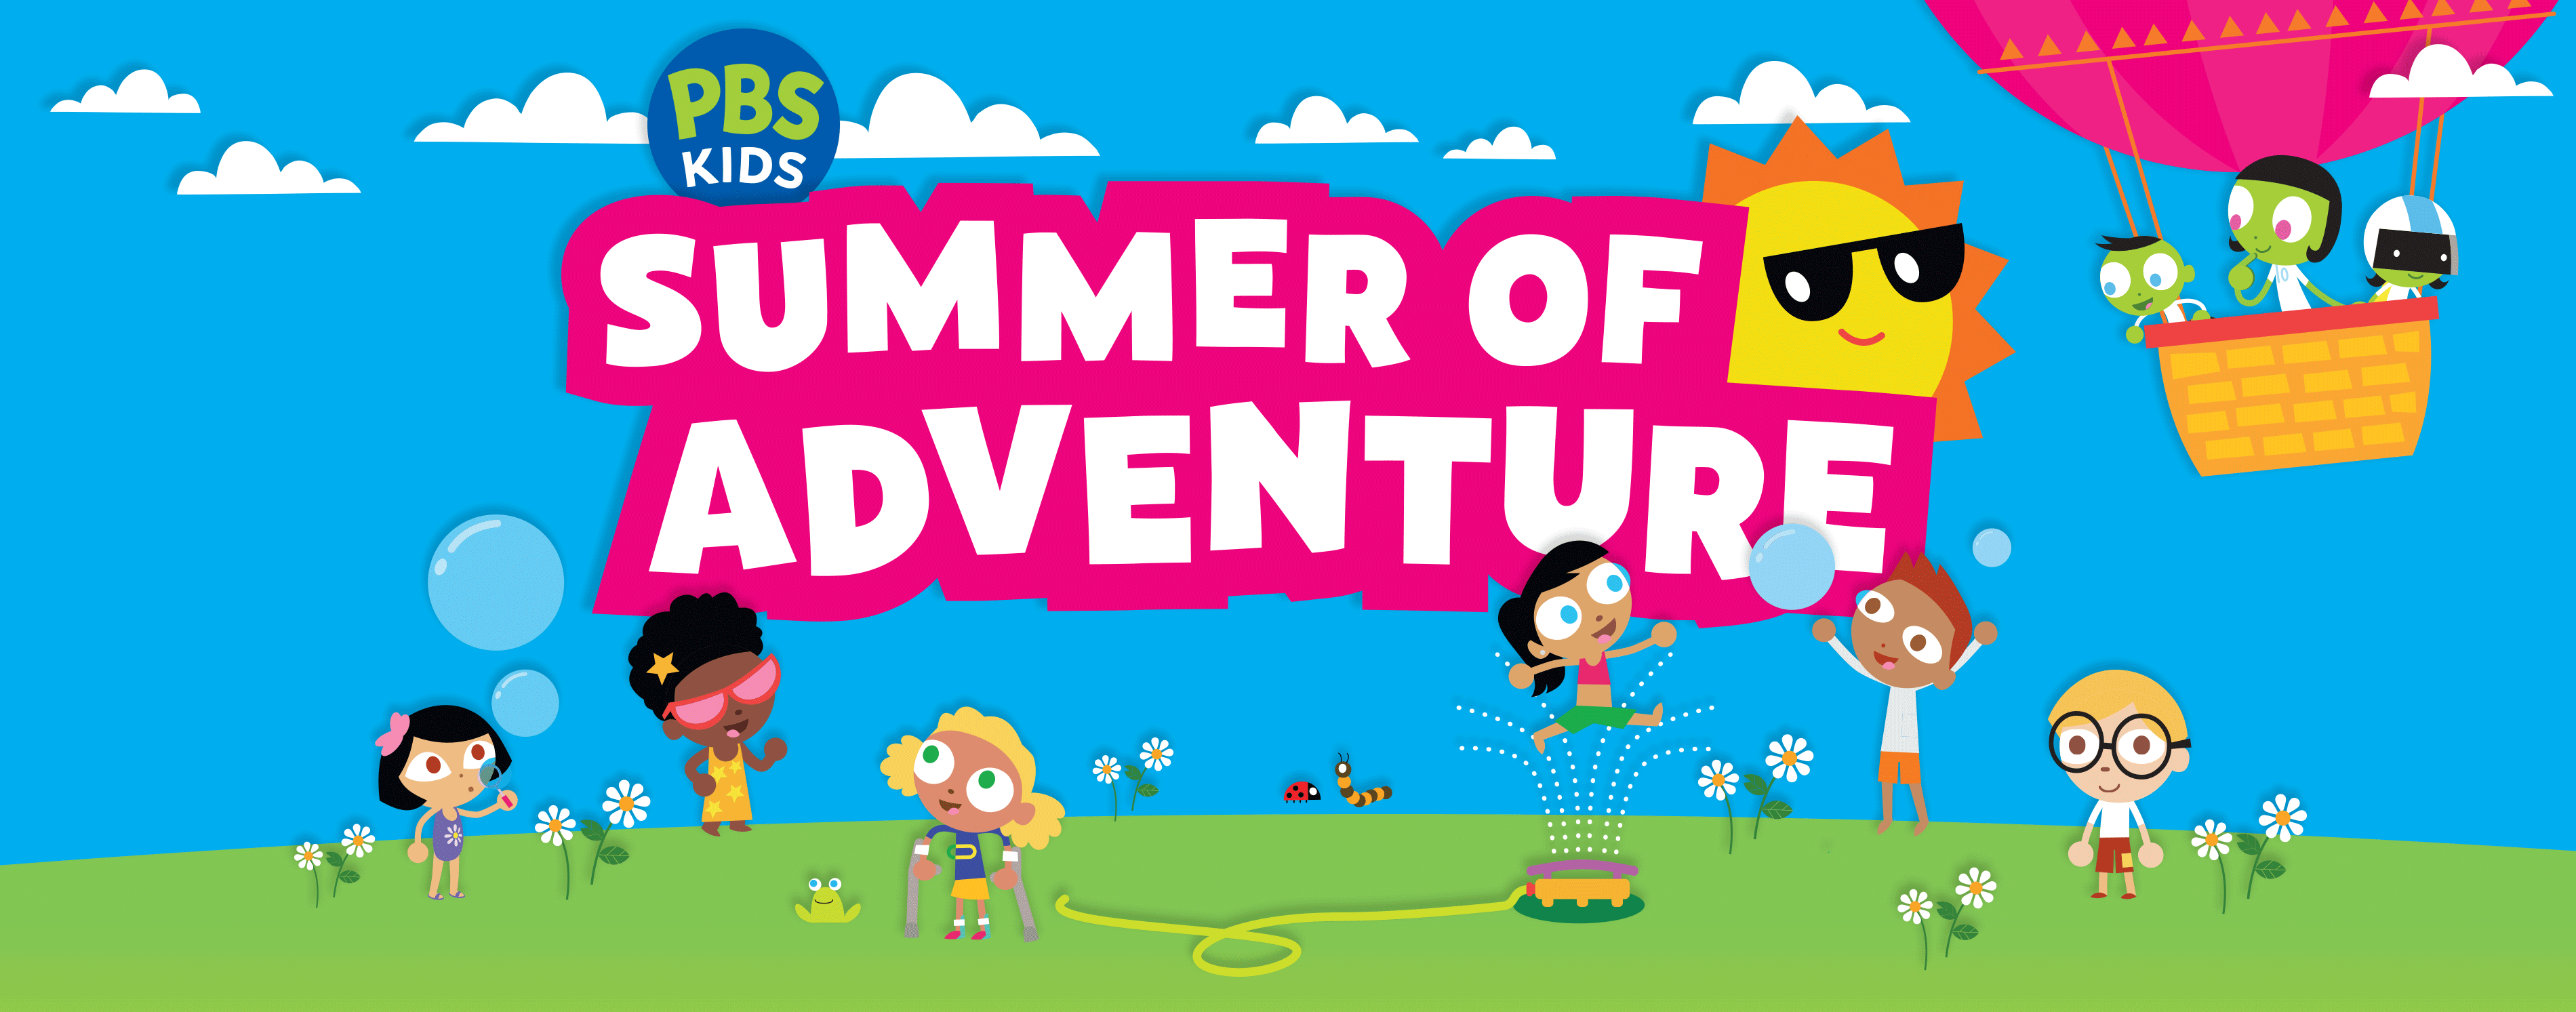 WQPT PBS Summer of Adventure